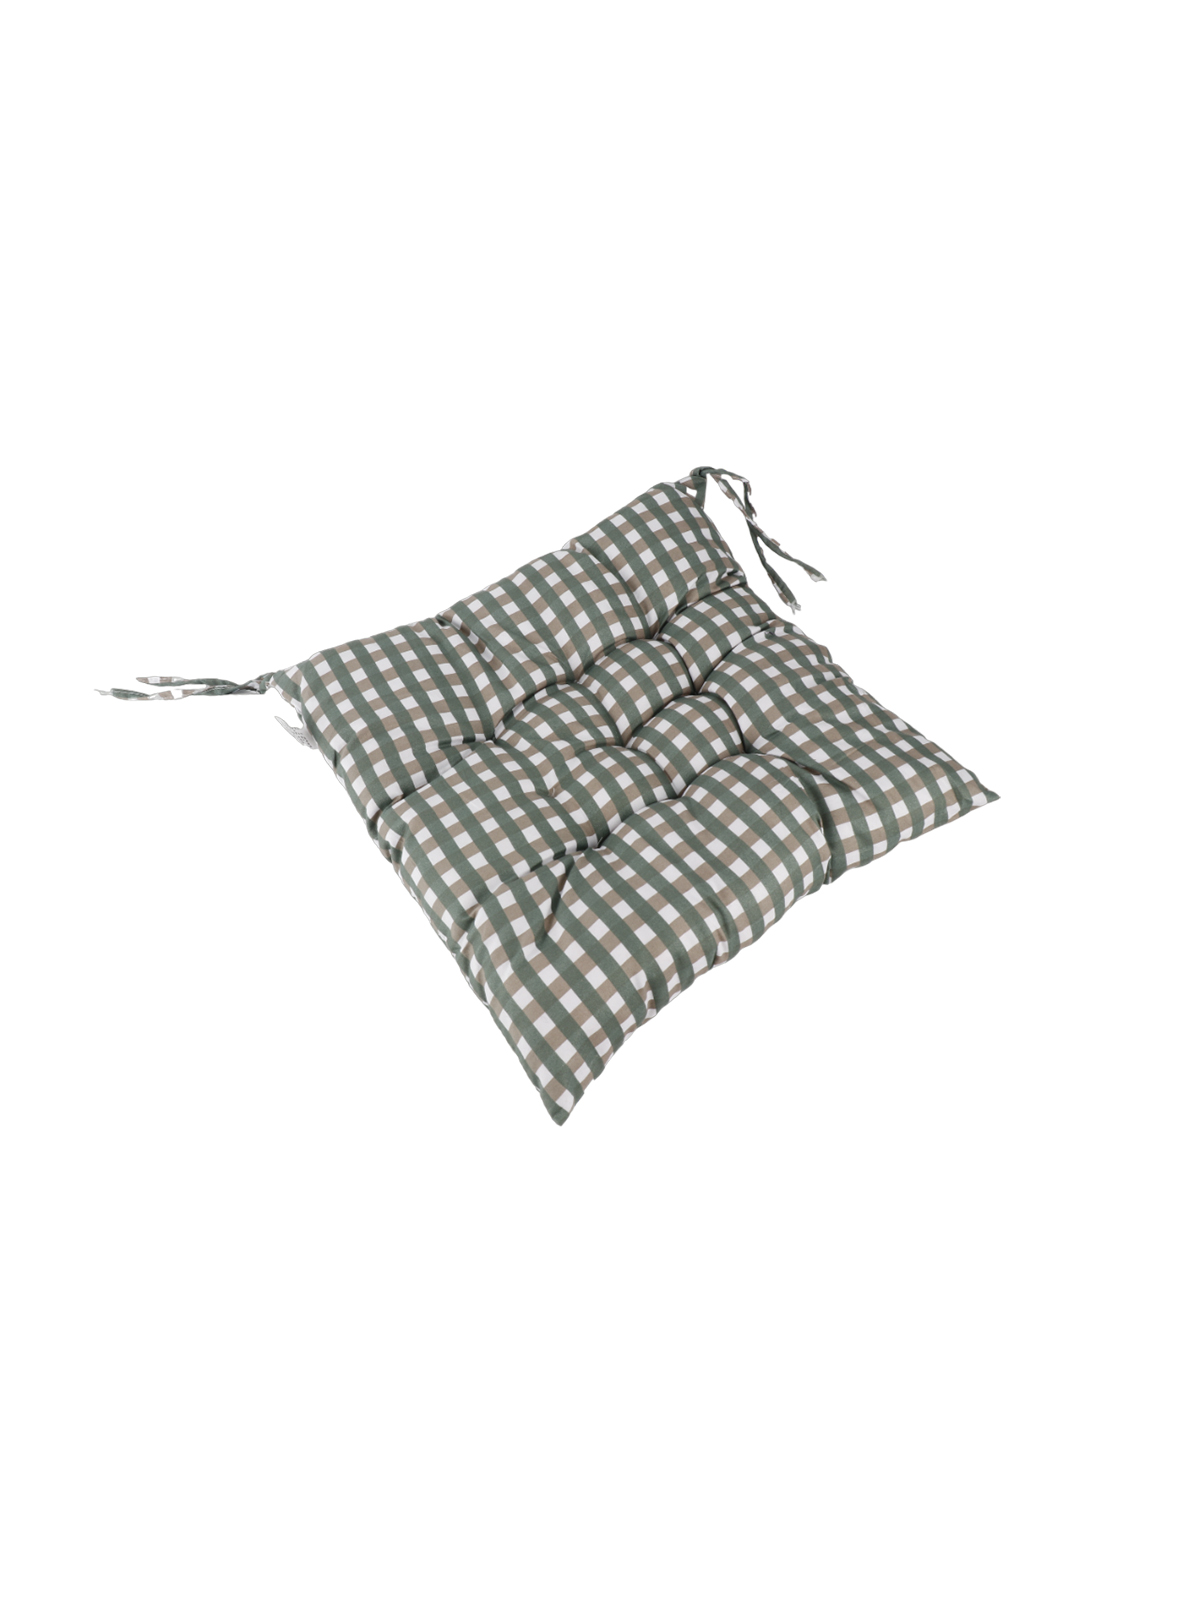 Подушка на стул с завязками "Мягкая", 39*39 см